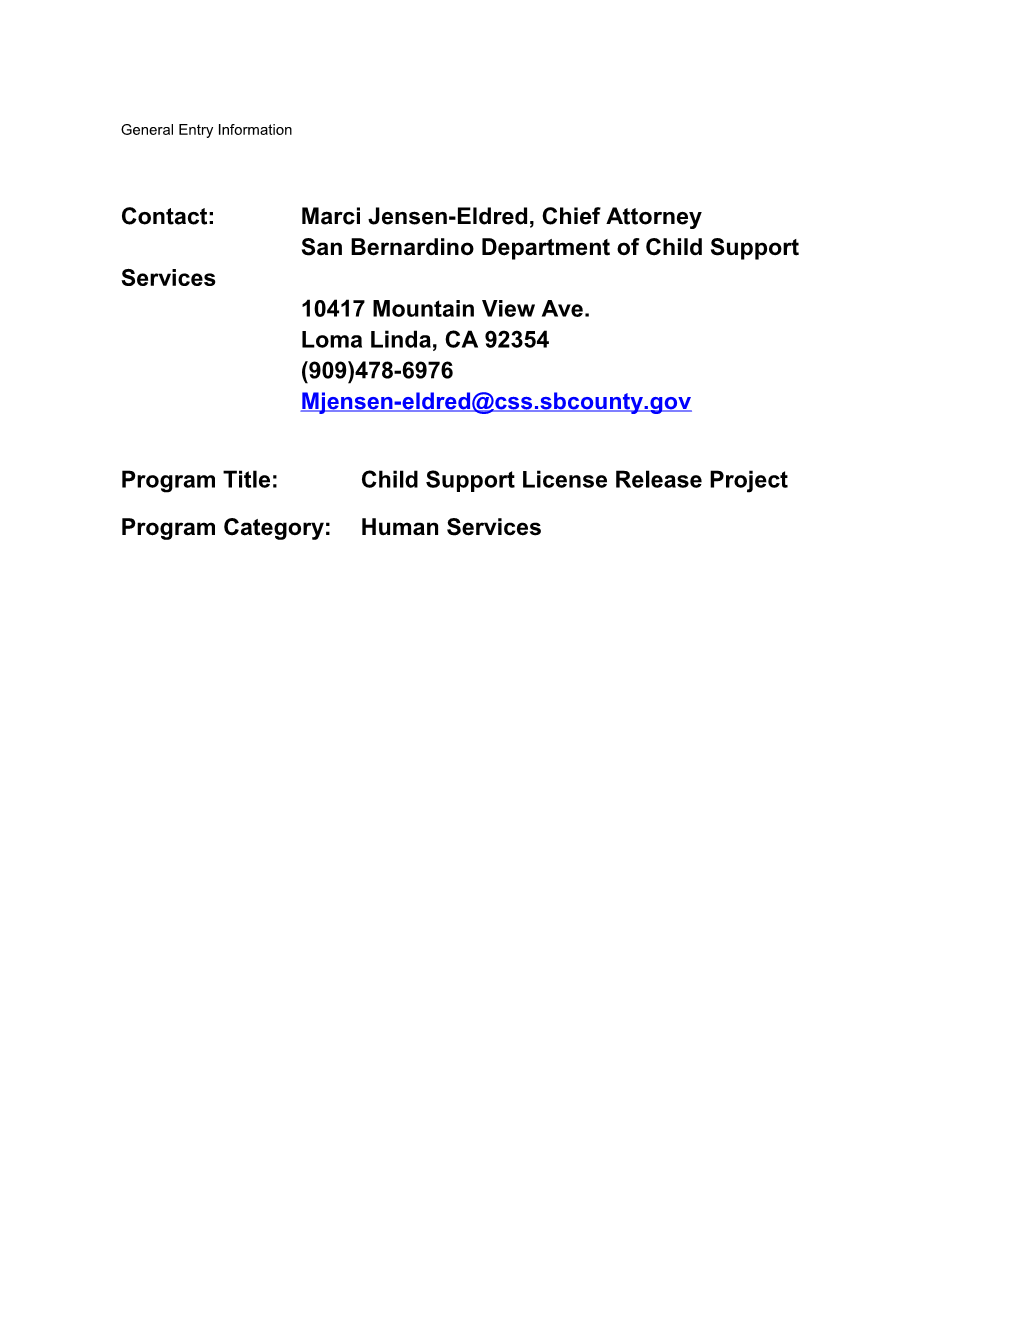 San Bernardino Department of Child Support Services